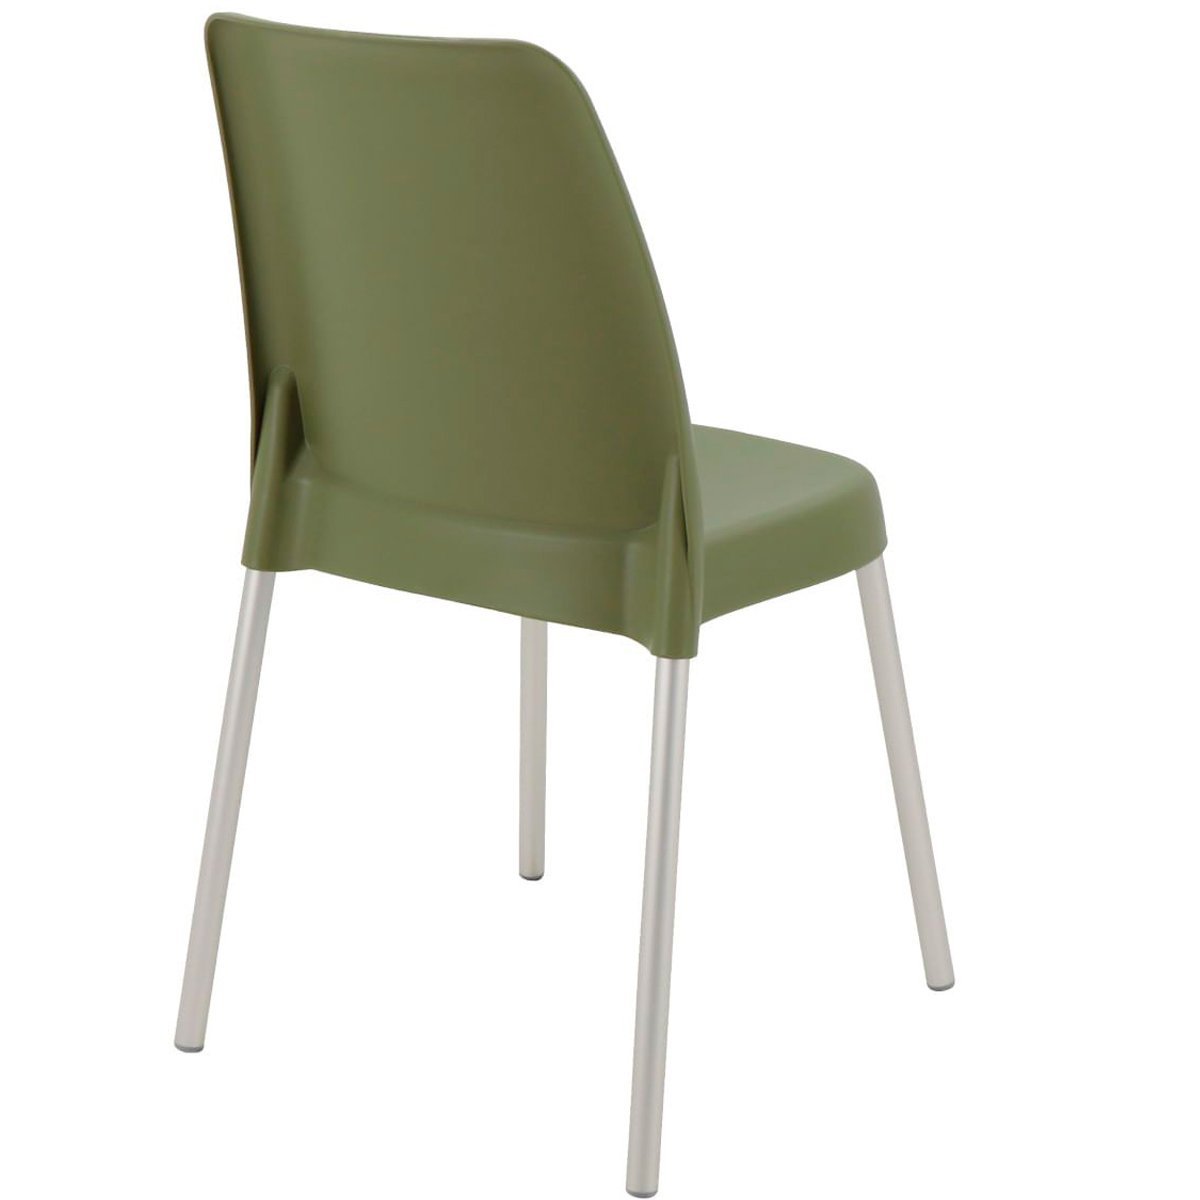 Conjunto 4 Cadeiras Plástica Vanda com Pernas de Alumínio Anodizadas- Tramontina - Verde Oliva 92053 - 5